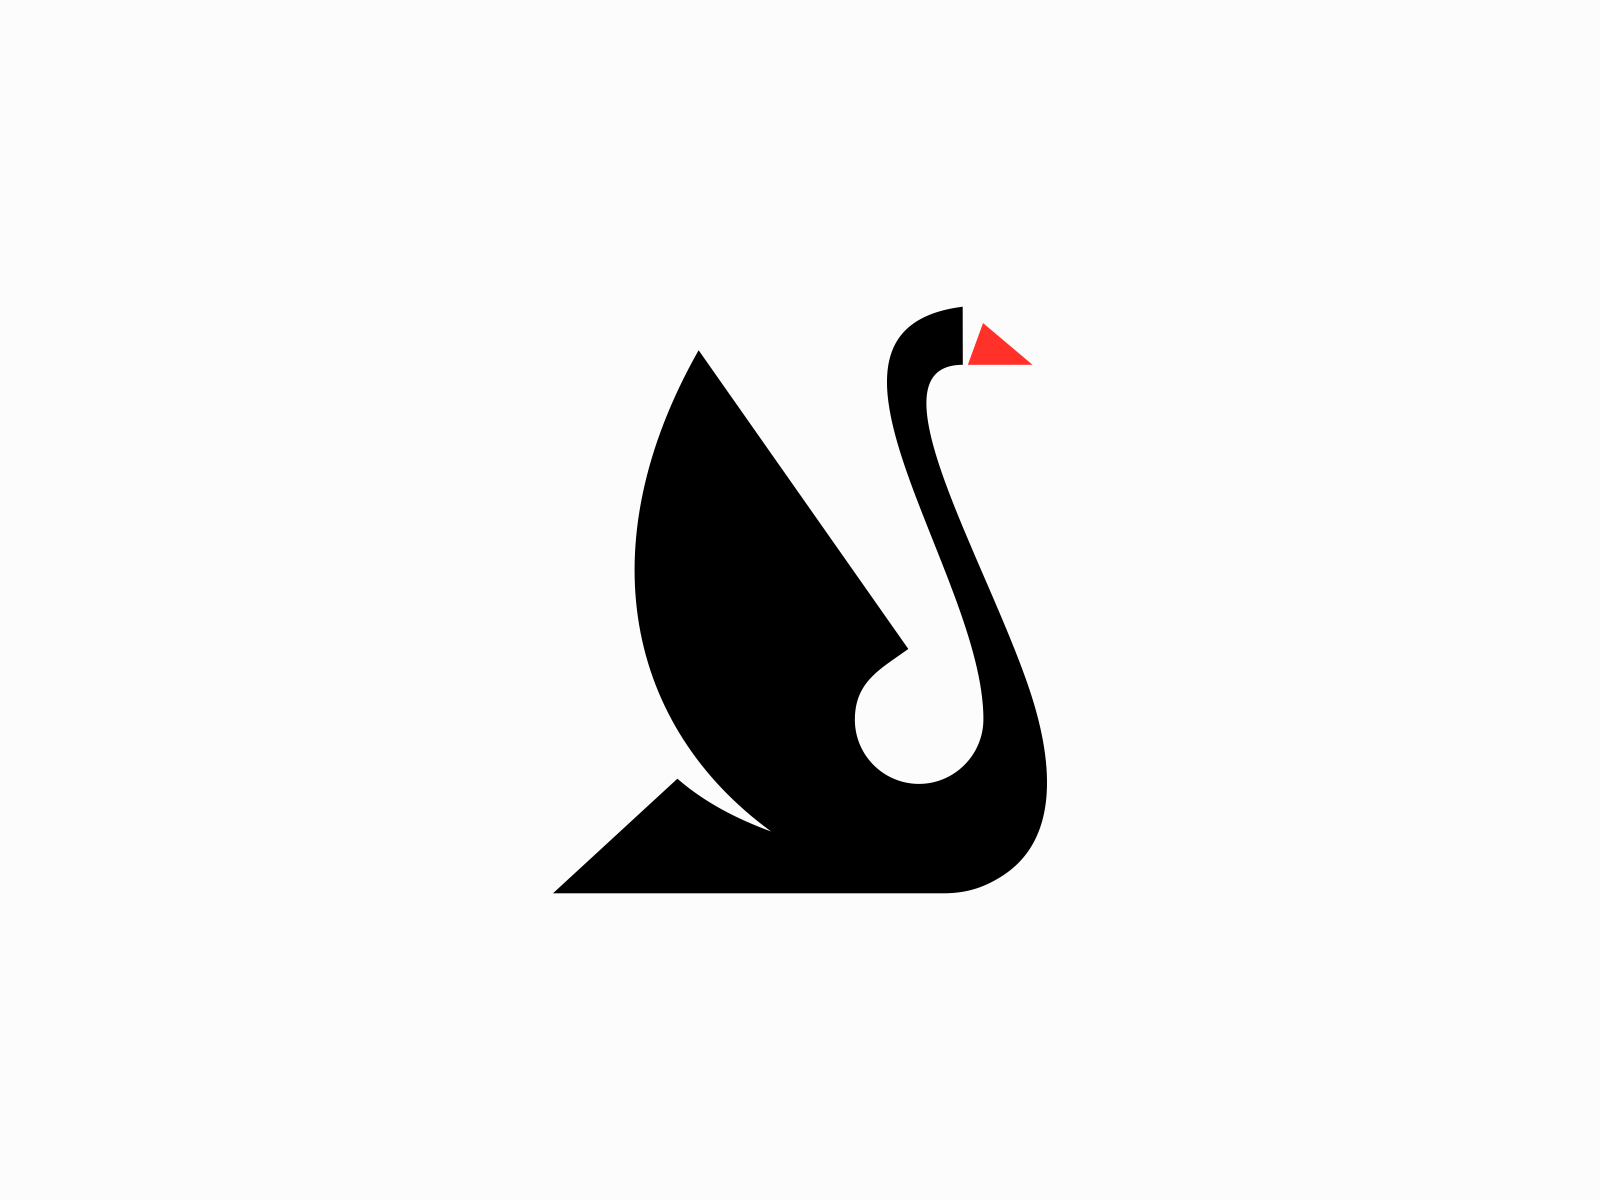 Black swan logo vector image. | CanStock